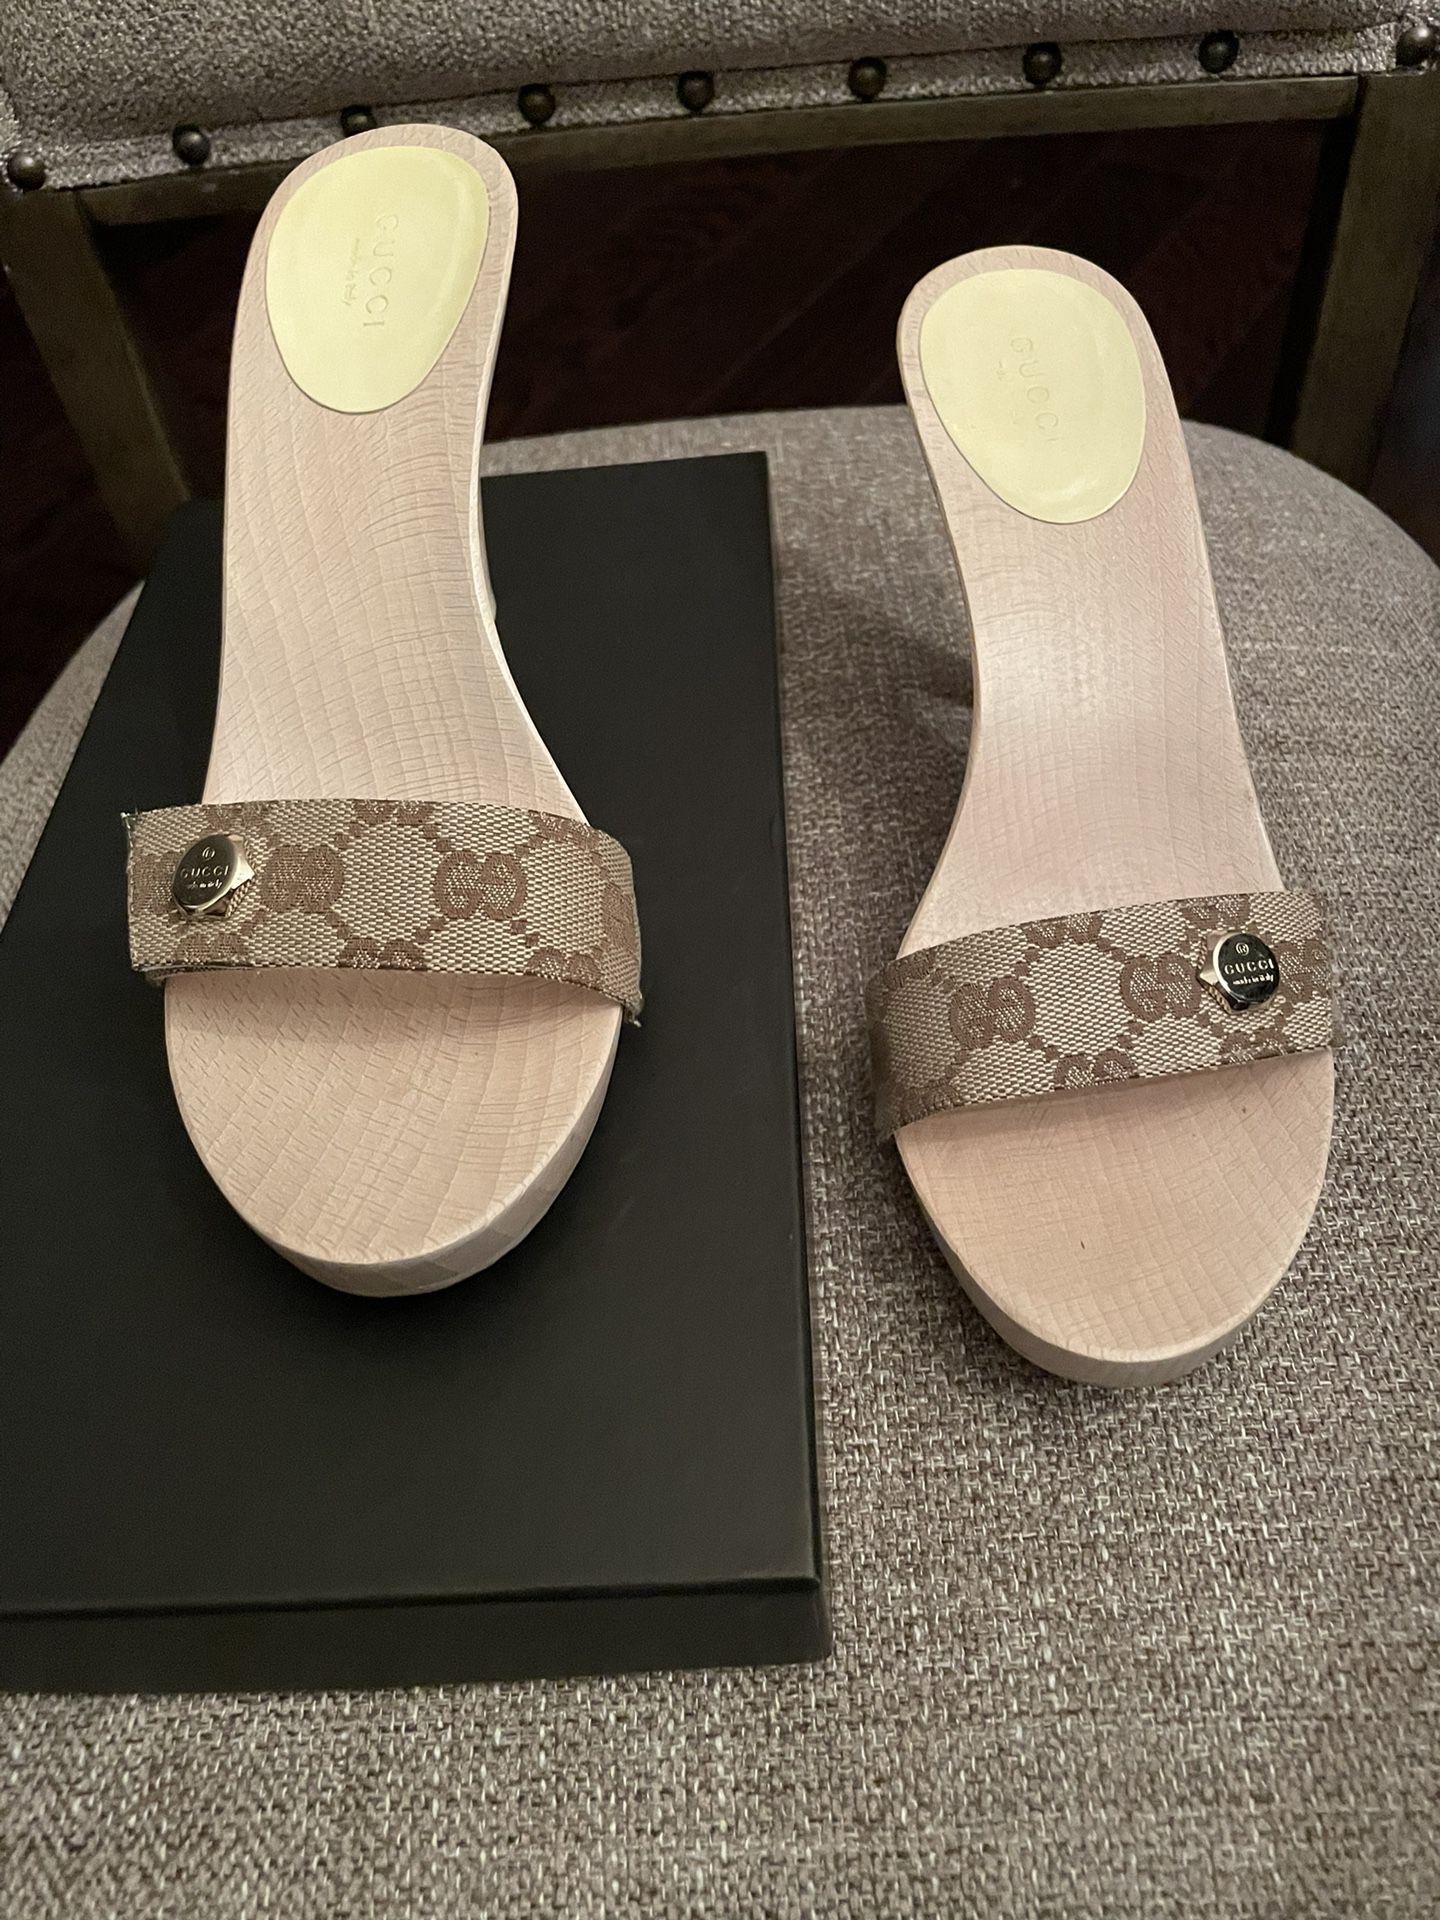 Gucci Shoes, Size 9 Heels / Slide Sandals $200 OBO